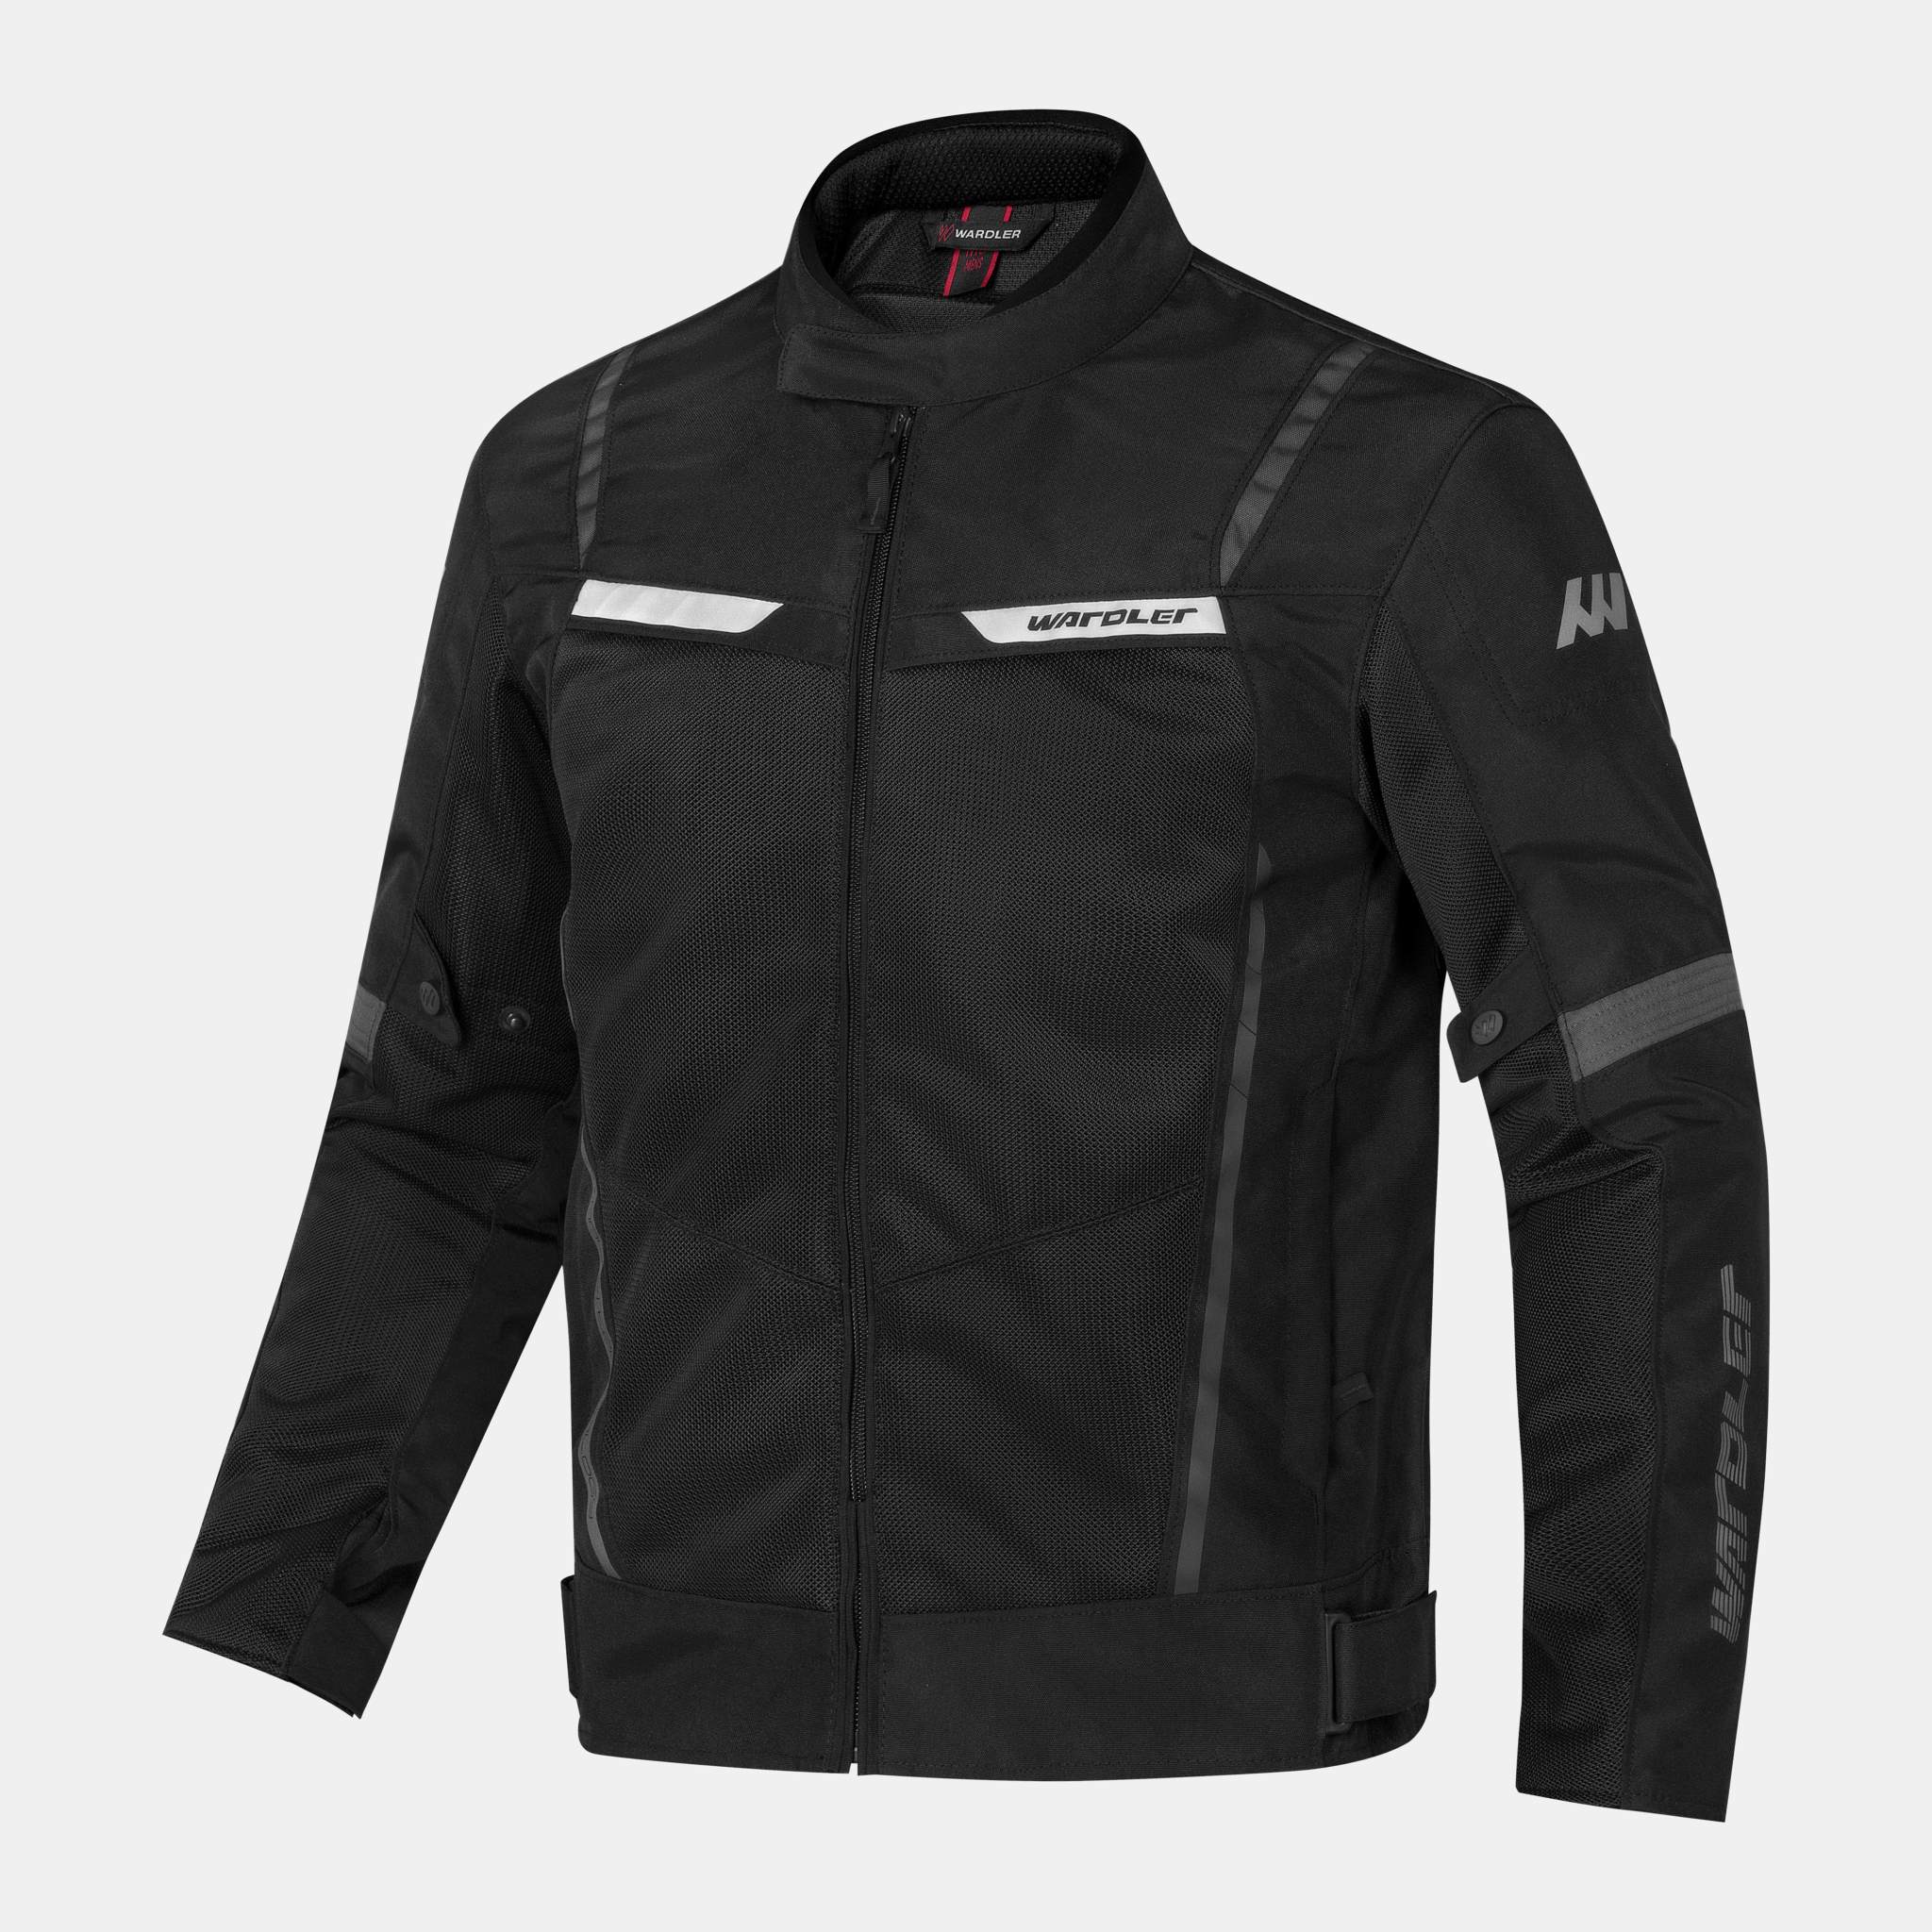 Tornado mesh summer motorcycle jackets, CE, Black, front